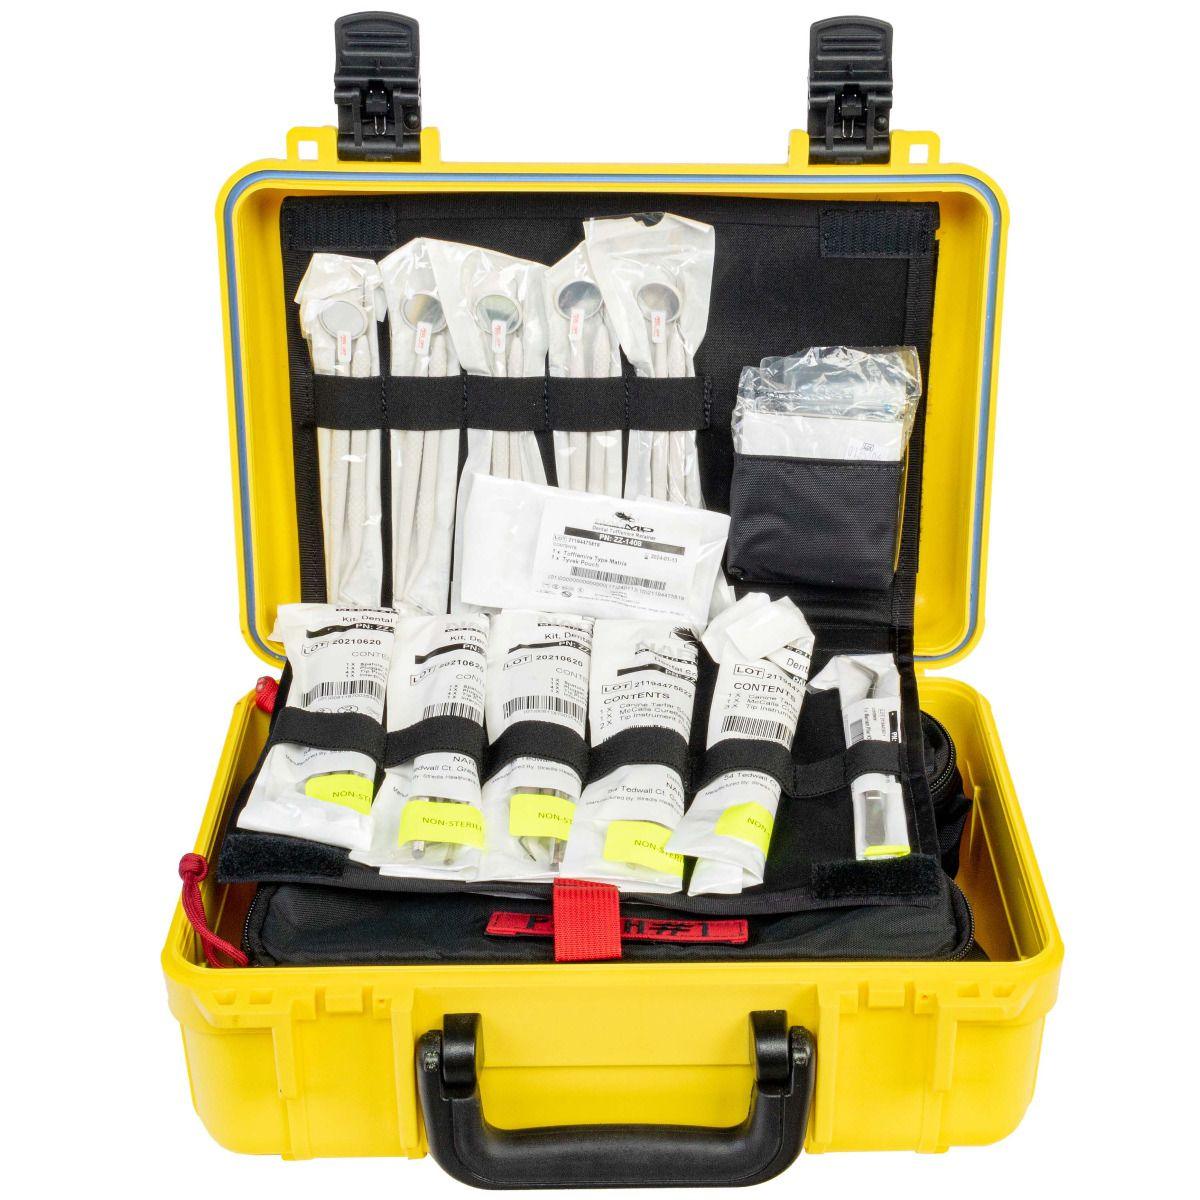 Dental Emergency Response kit - Vendor